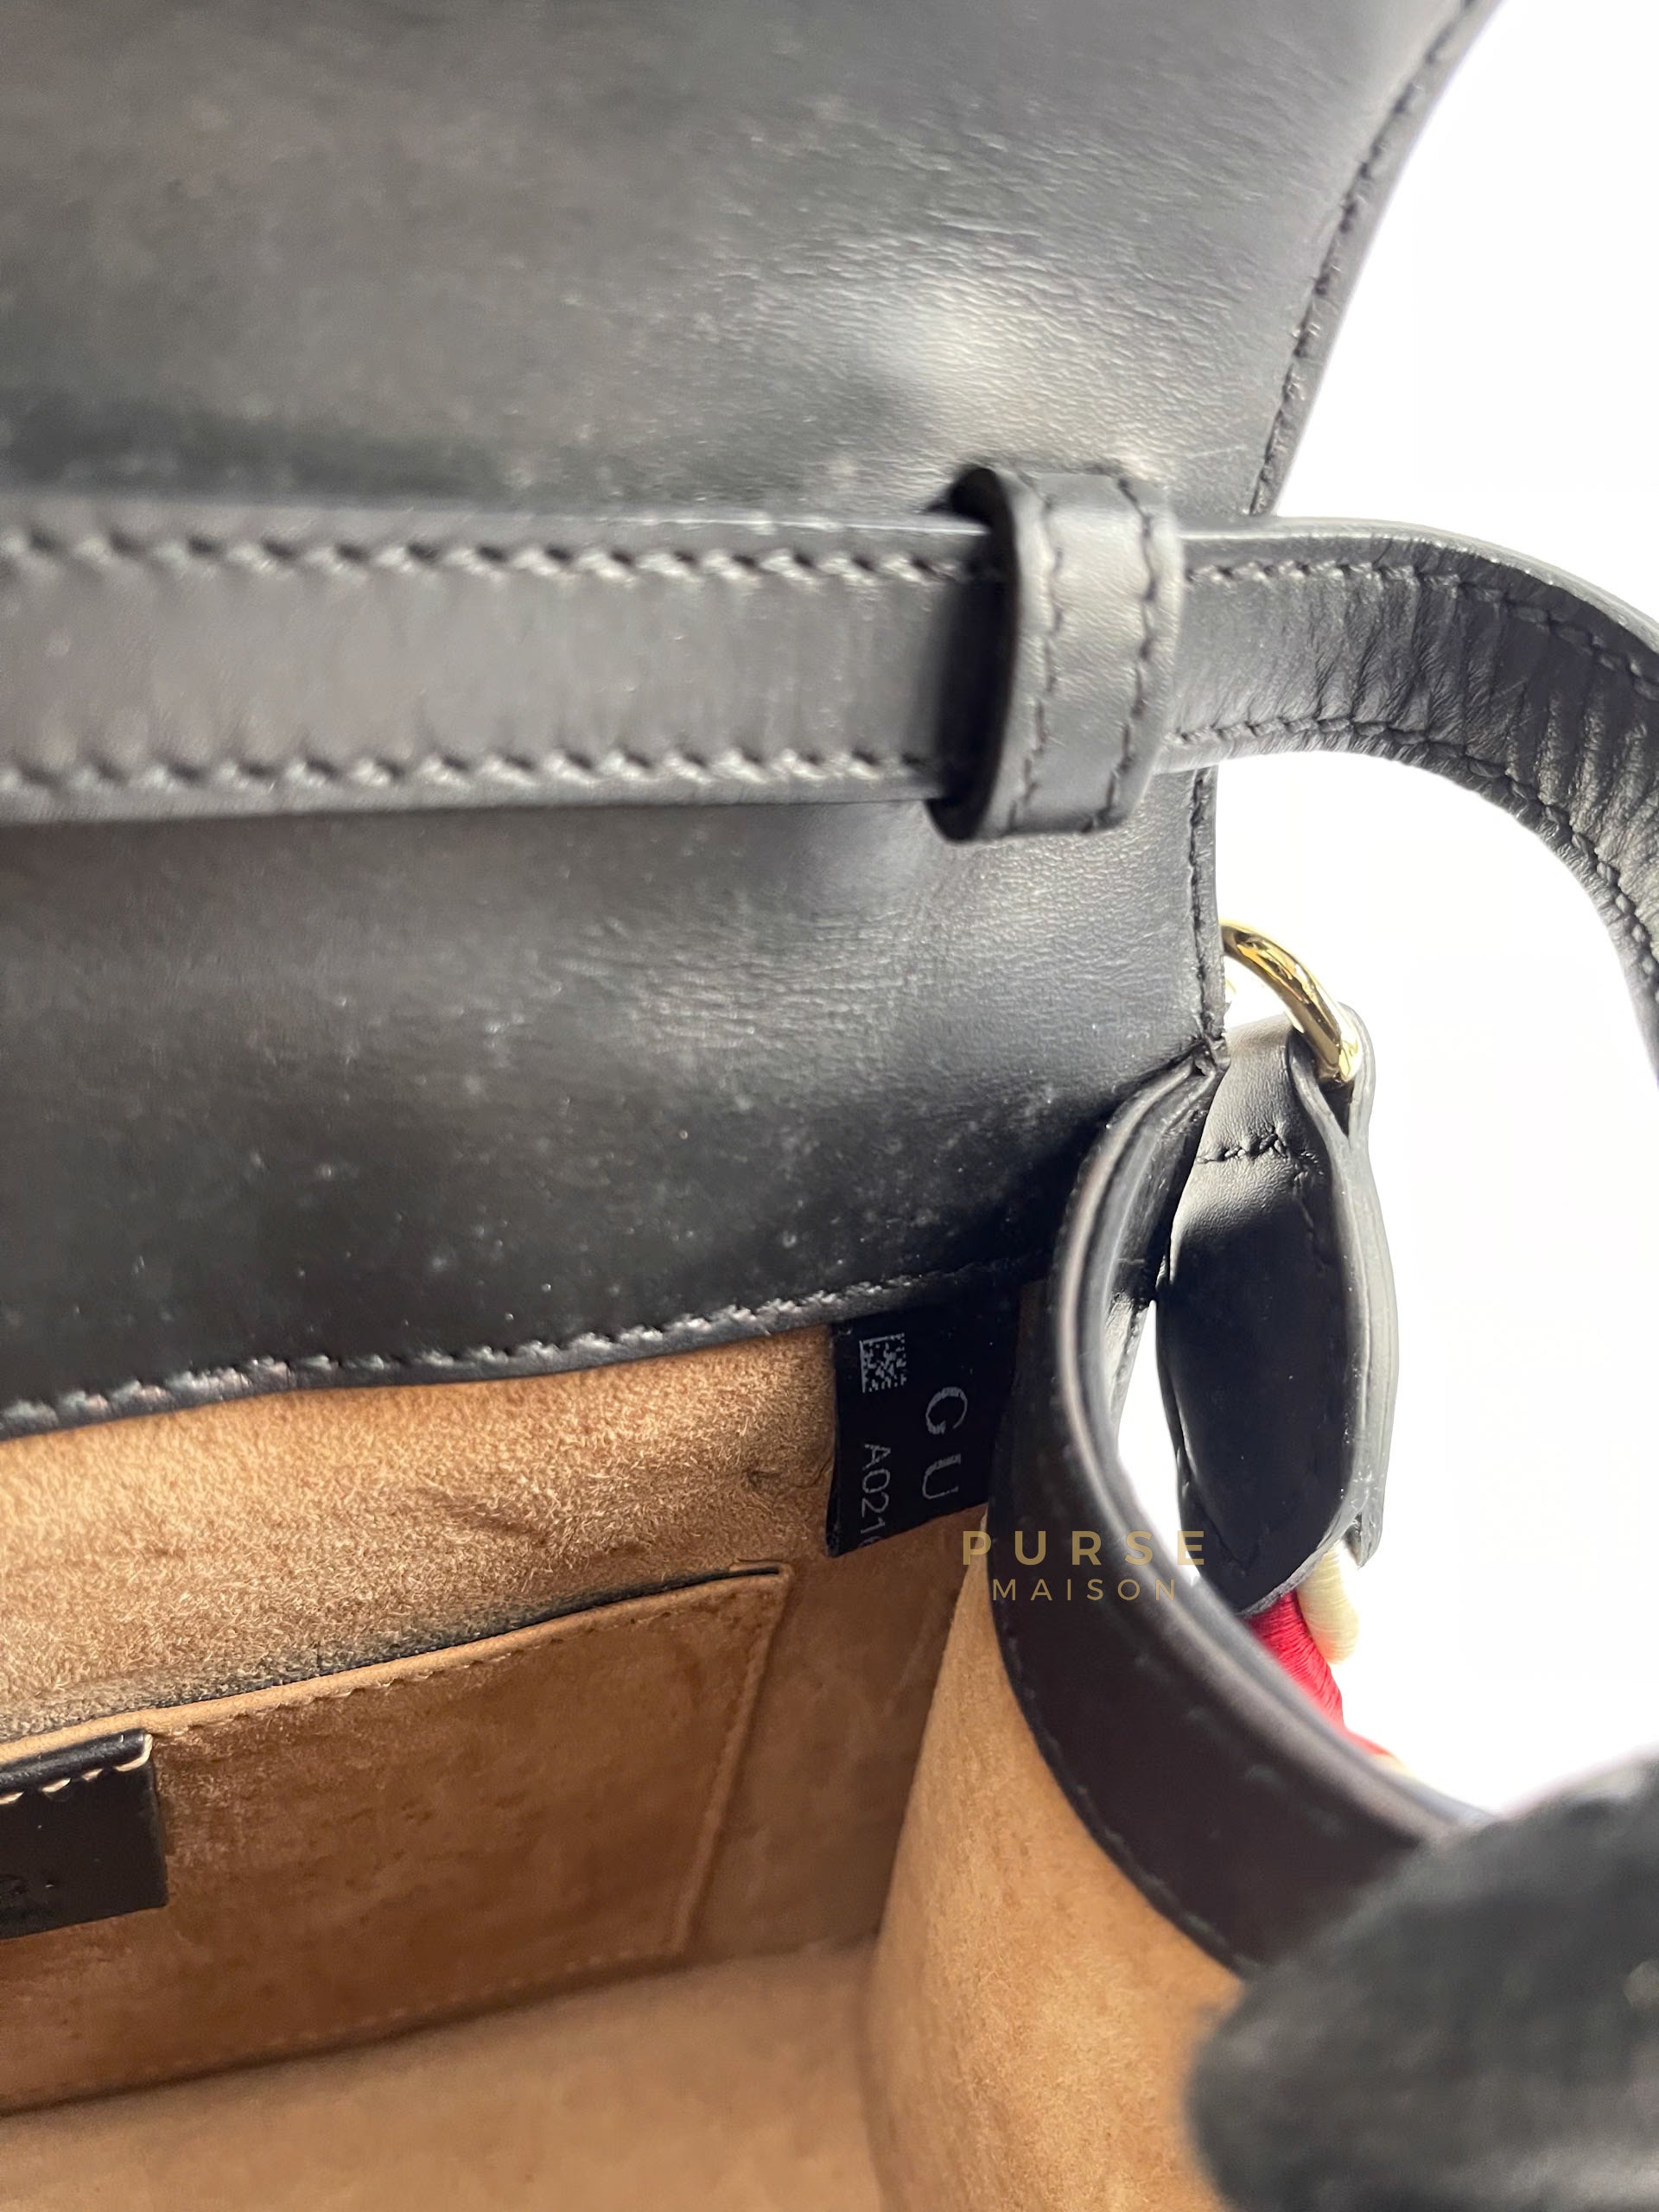 Mini Sylvie Black Smooth Calfskin Leather Bag | Purse Maison Luxury Bags Shop